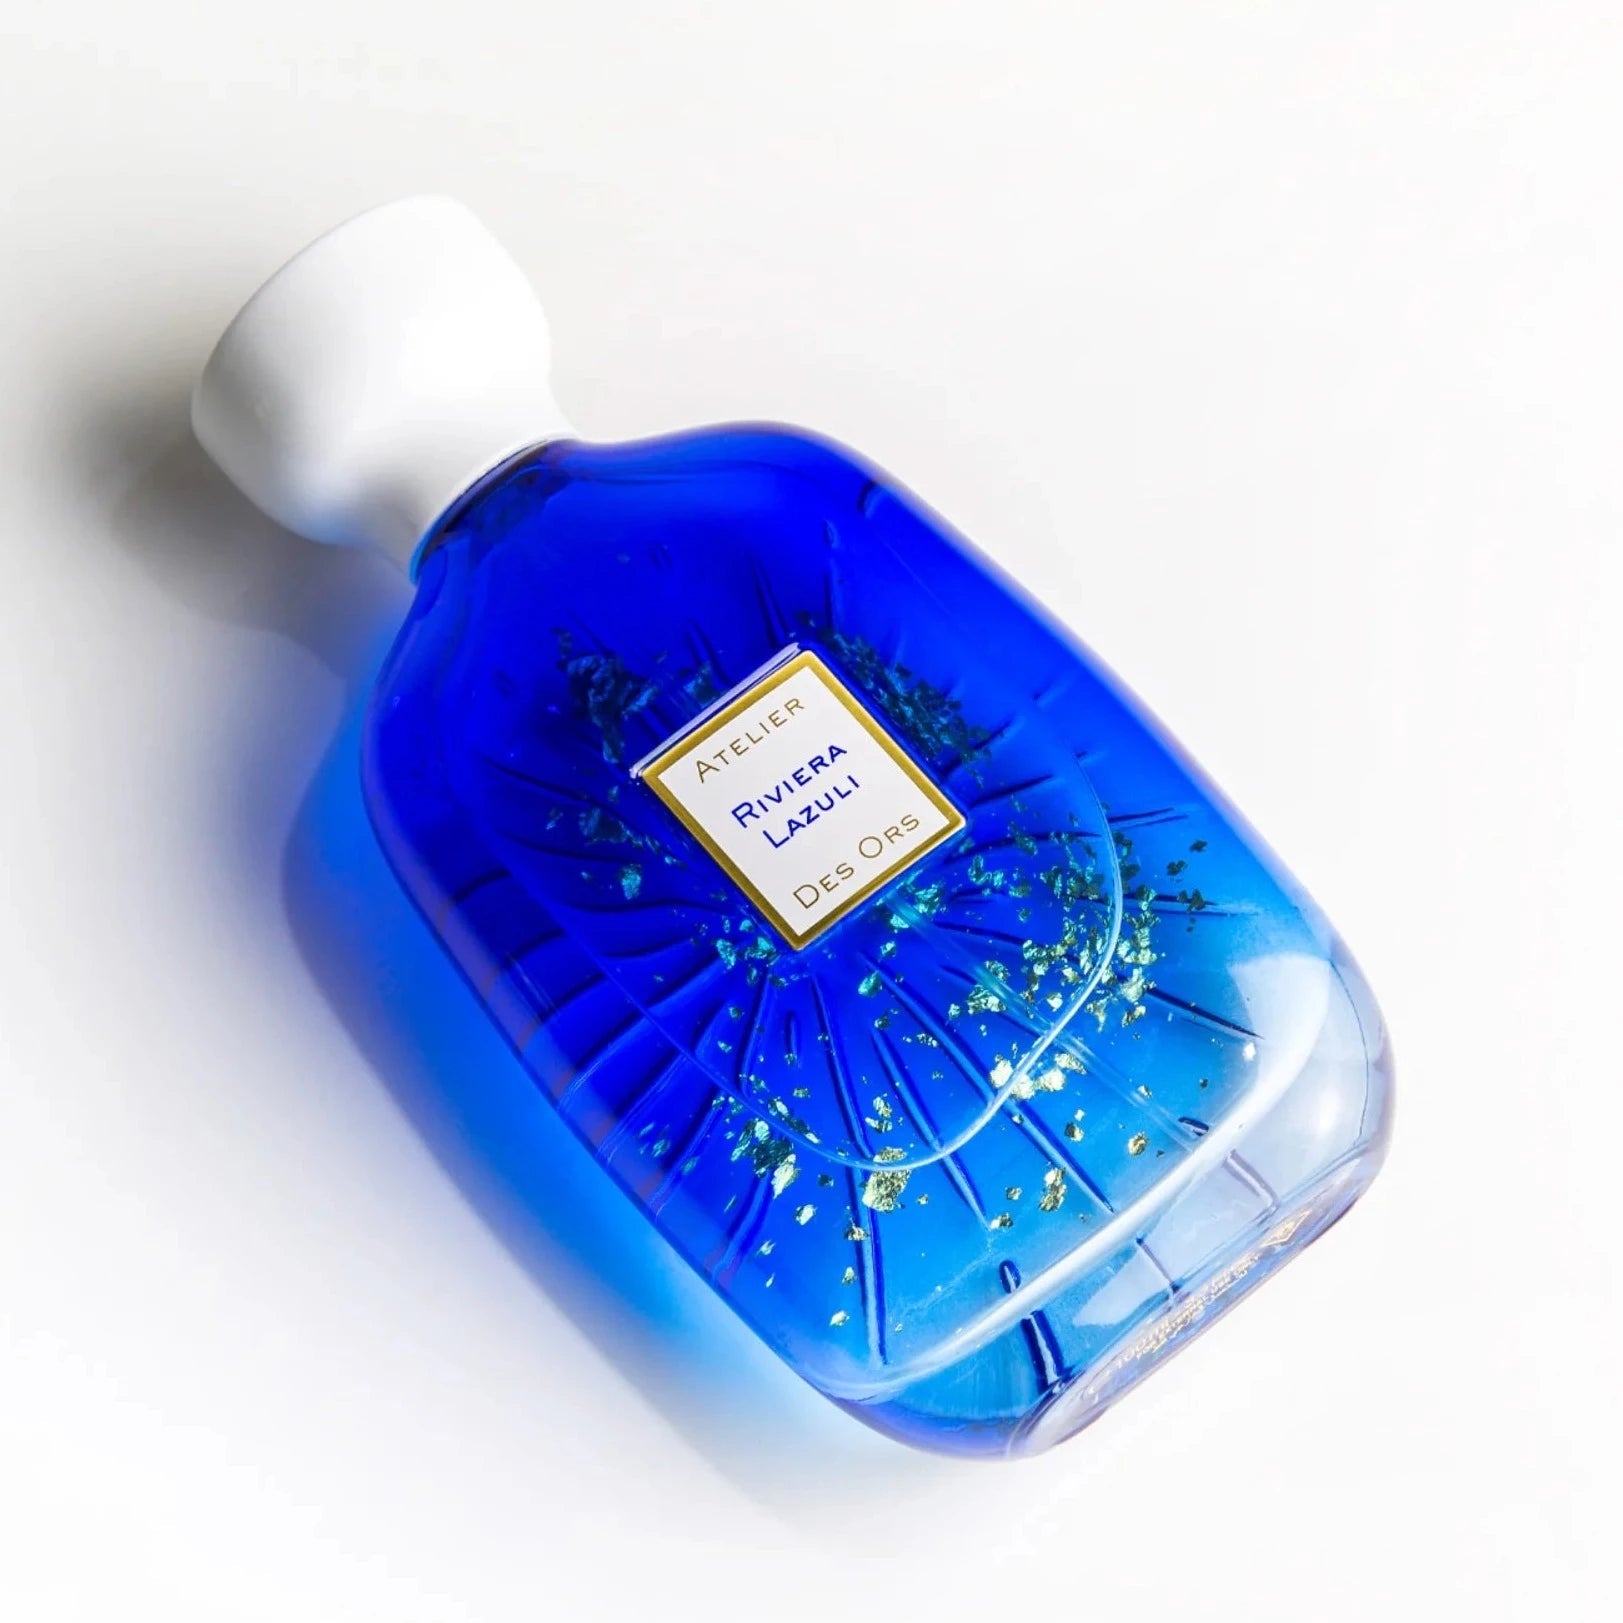 Atelier Des Ors Riviera Lazuli EDP | My Perfume Shop Australia